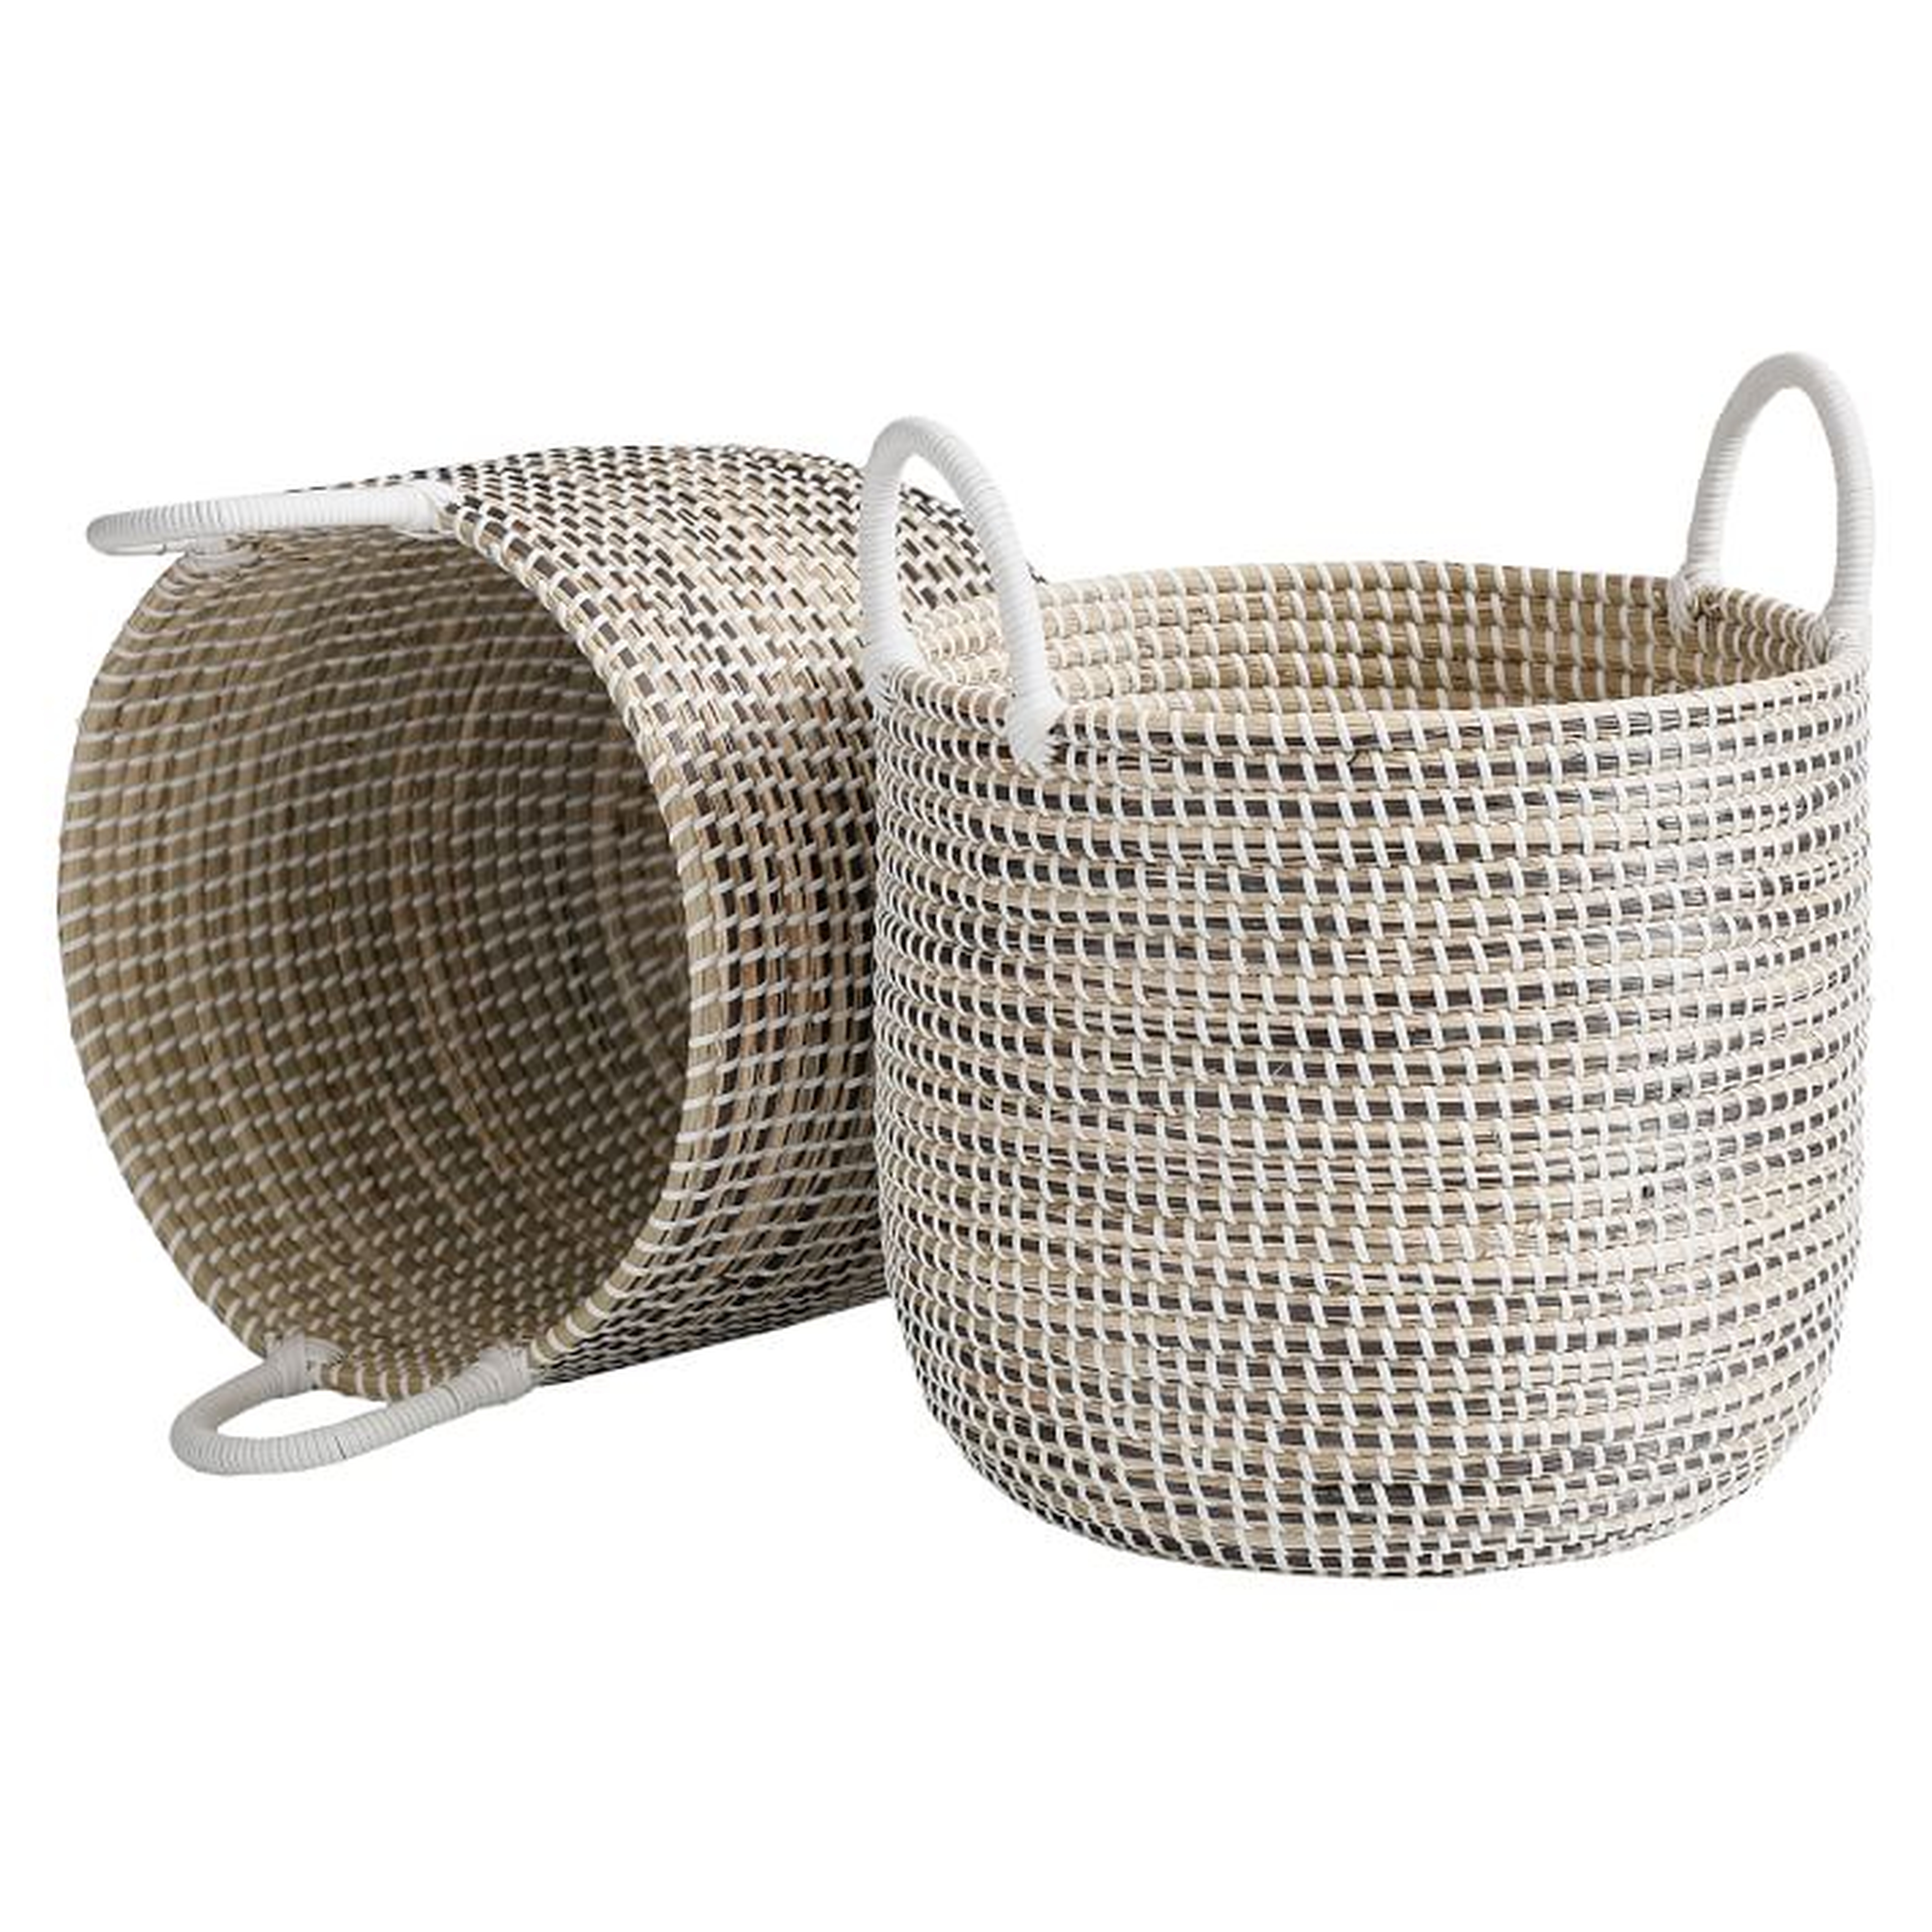 Woven Seagrass Storage Baskets, Medium, Set of 2, Natural - Pottery Barn Teen